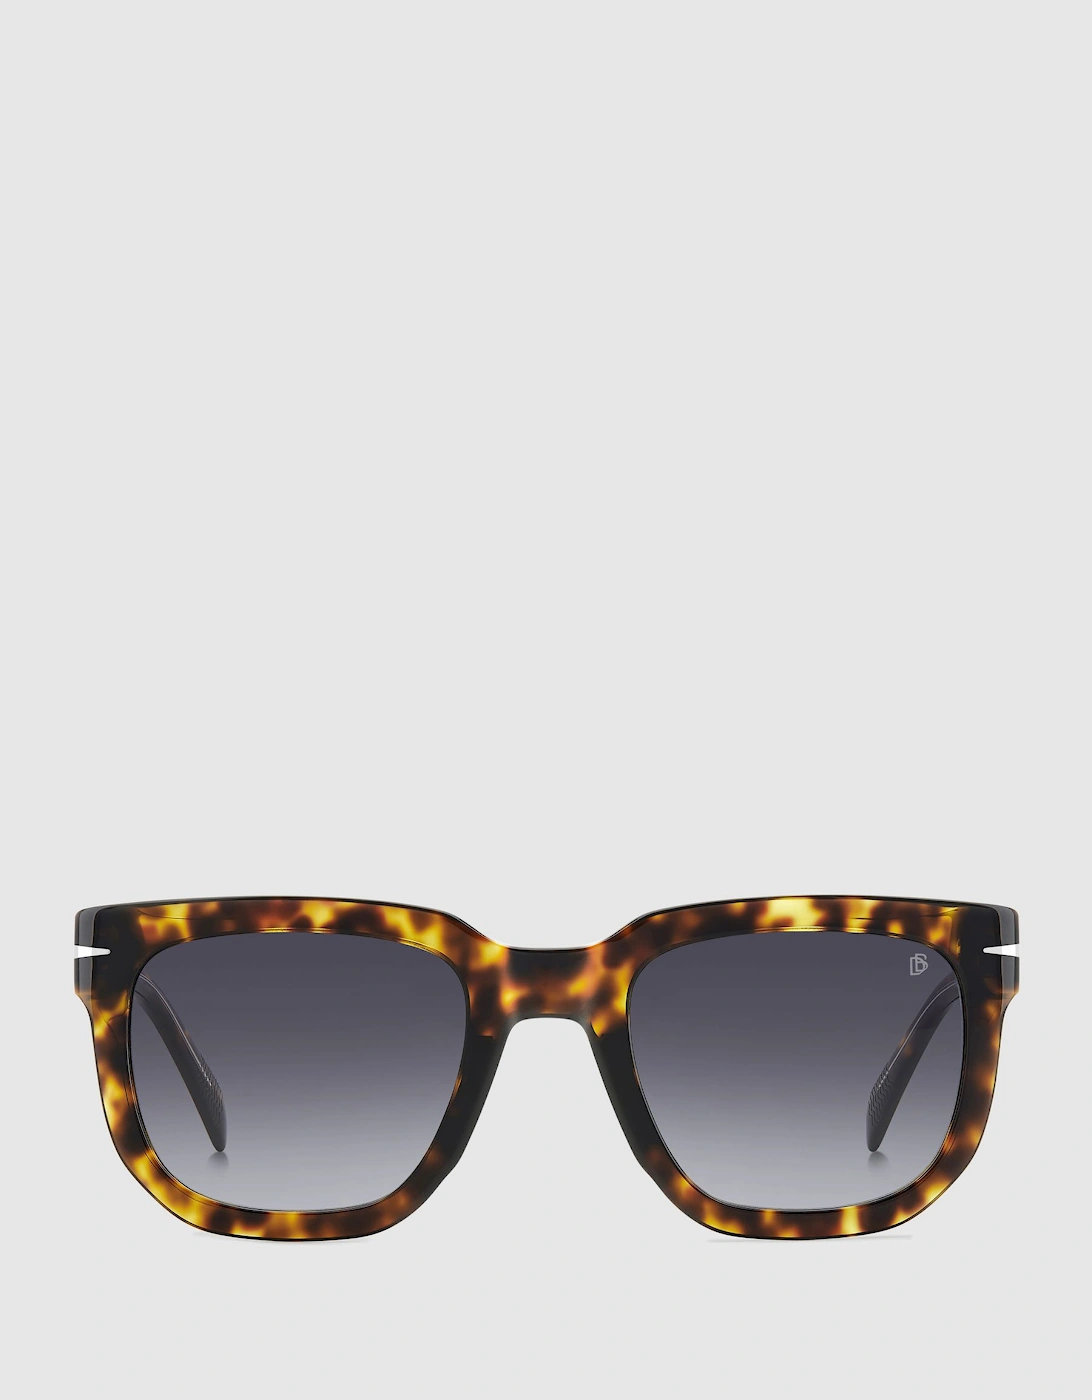 David Beckham Eyewear by Tortoiseshell Sunglasses, 2 of 1